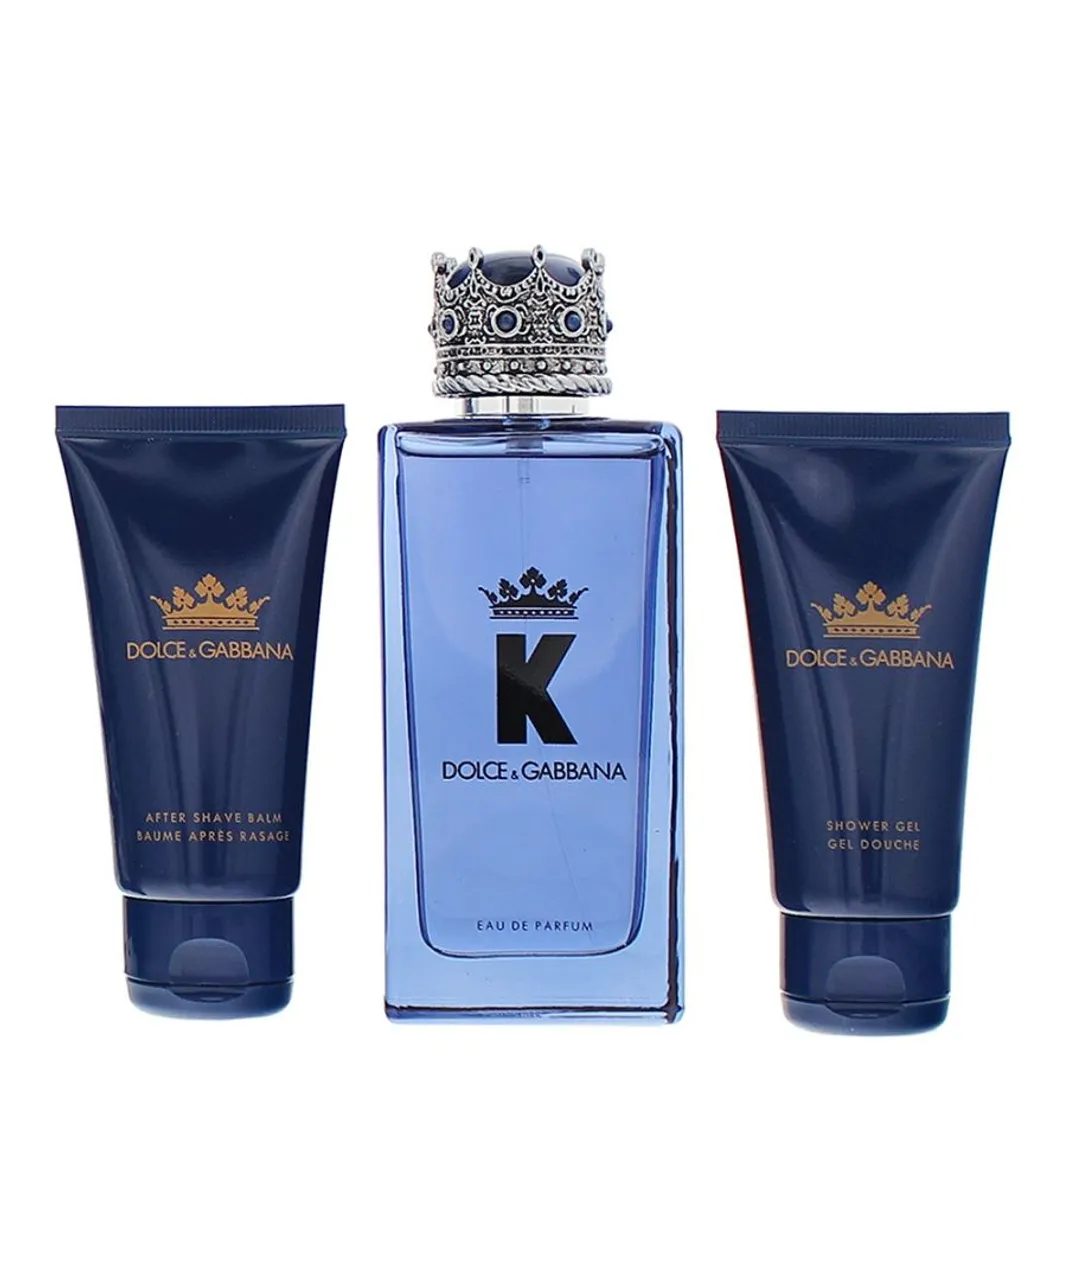 Dolce & Gabbana Mens K Eau De Parfum 100ml, Aftershave Balm 50ml + Shower Gel Gift Set - One Size